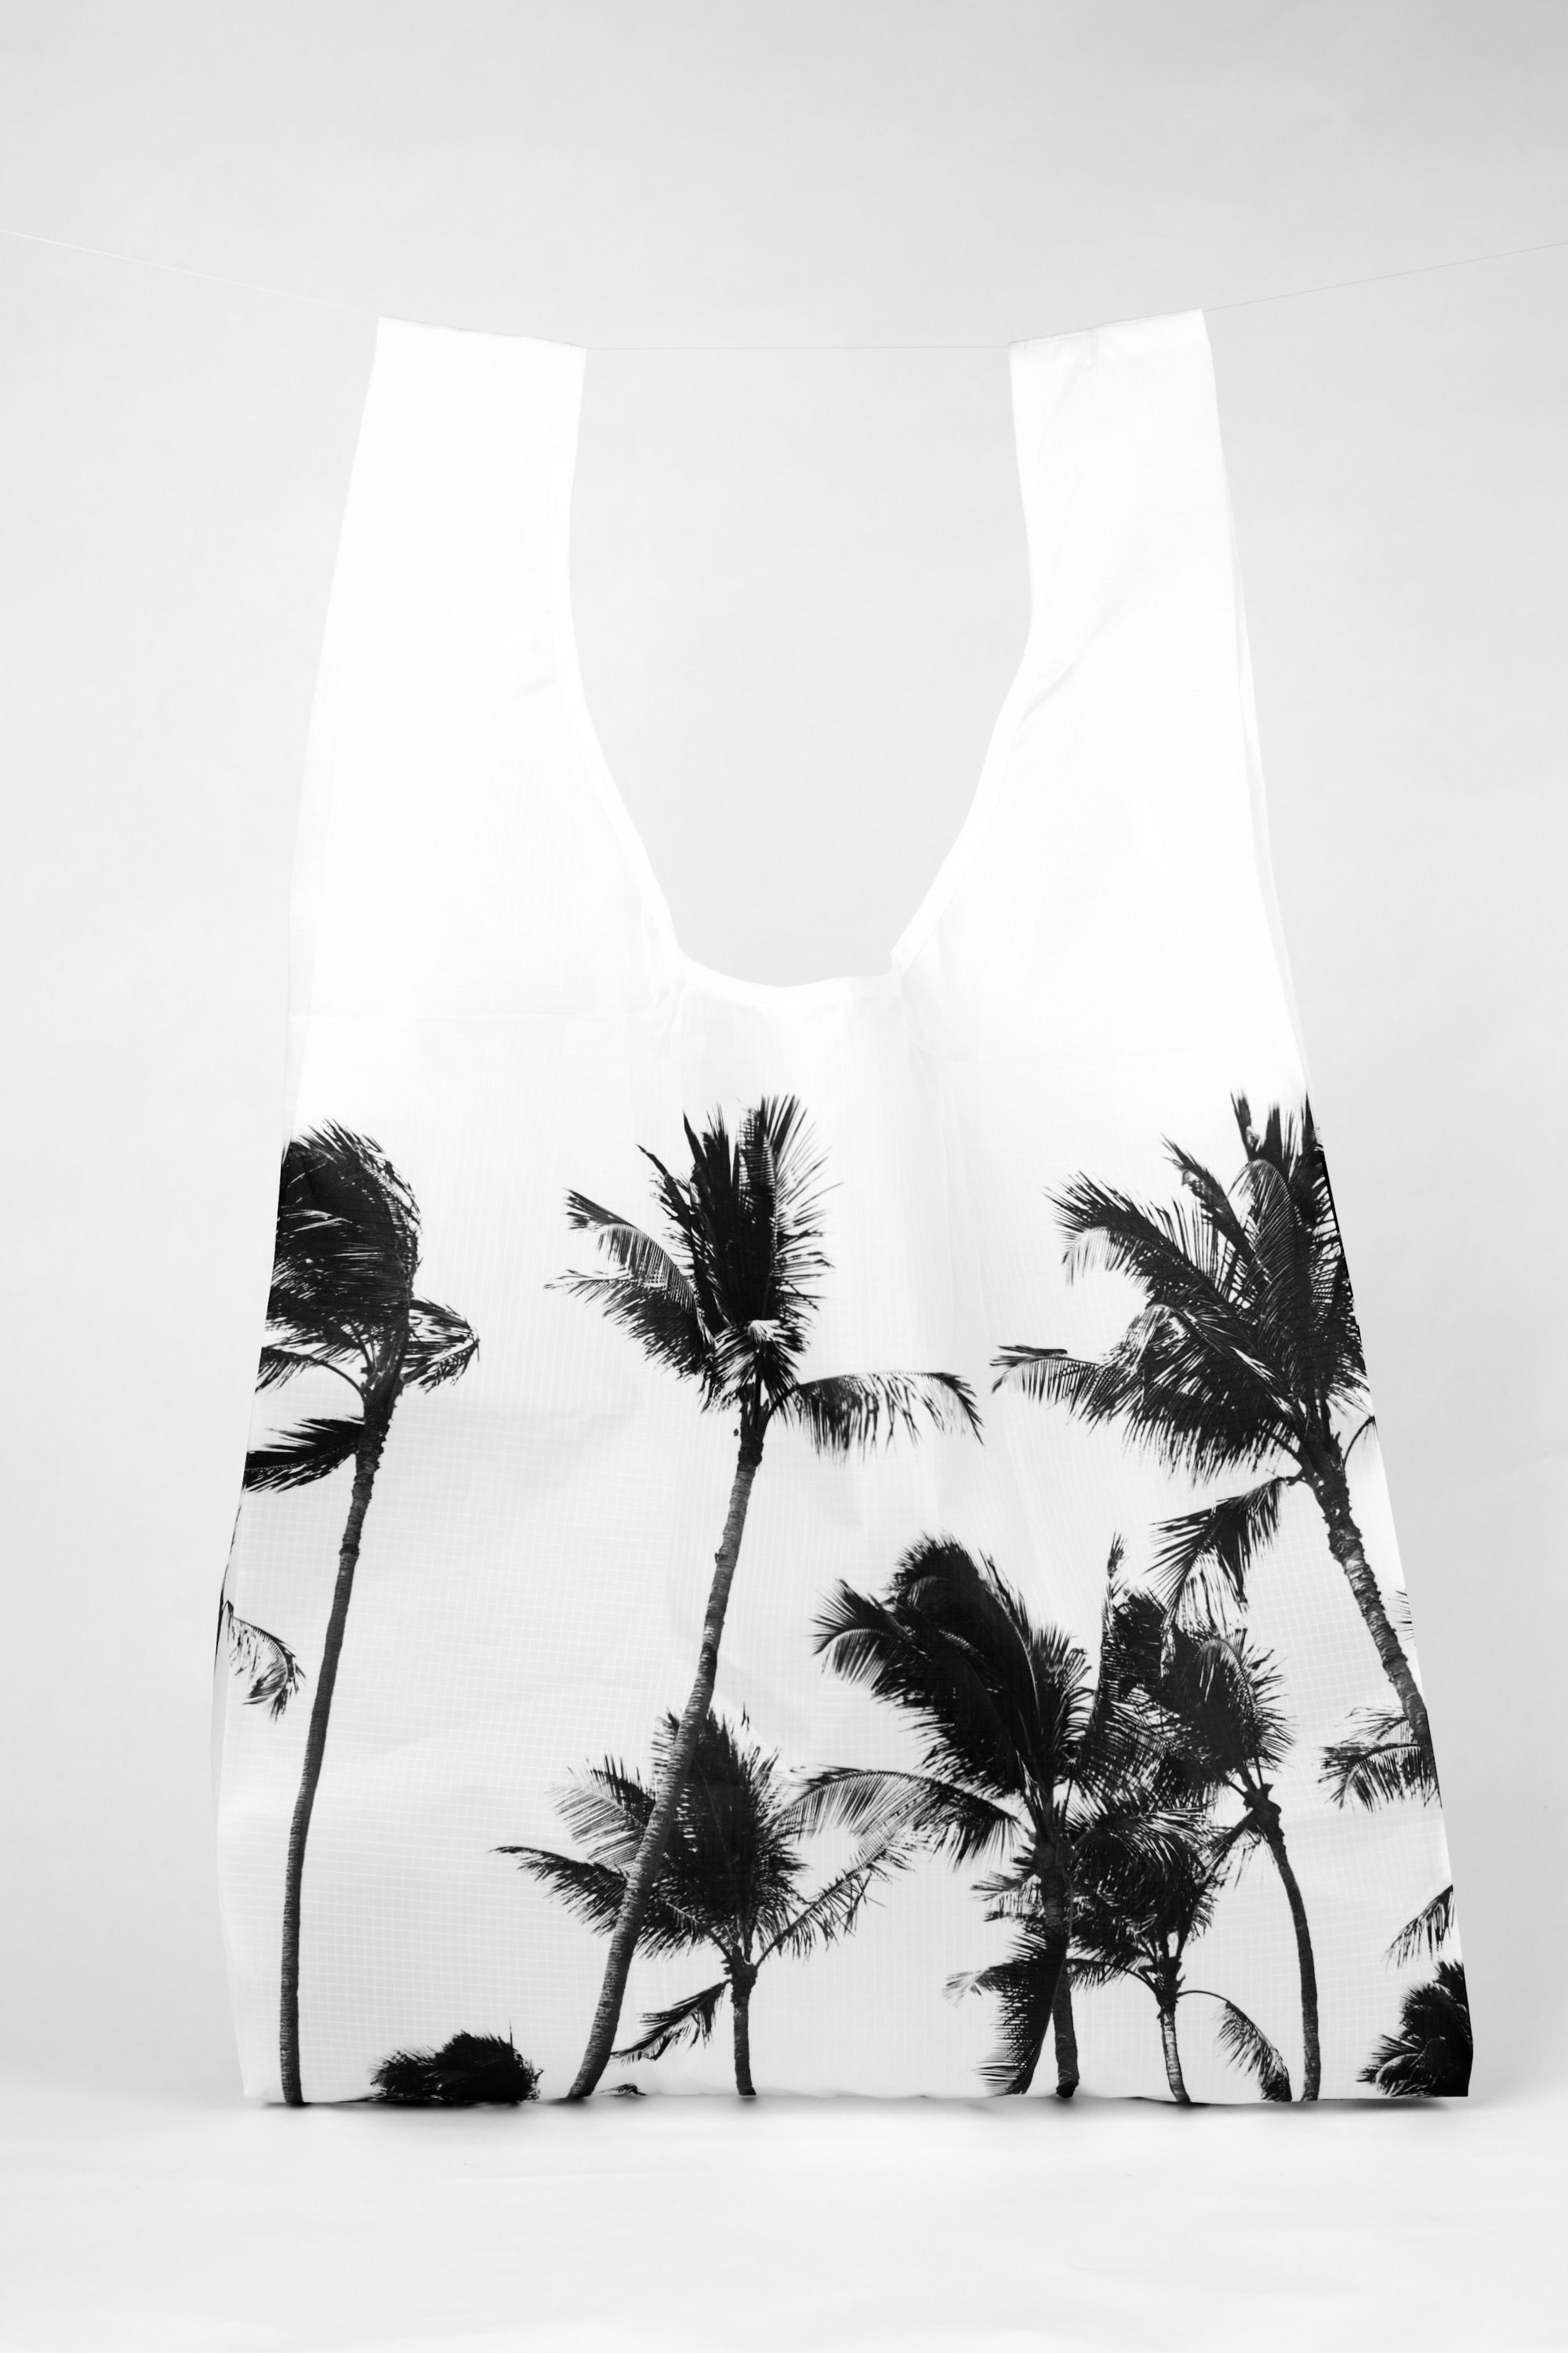 Beach Themed Tote Bag | Coco Palms Hawaii Kai | Citadine